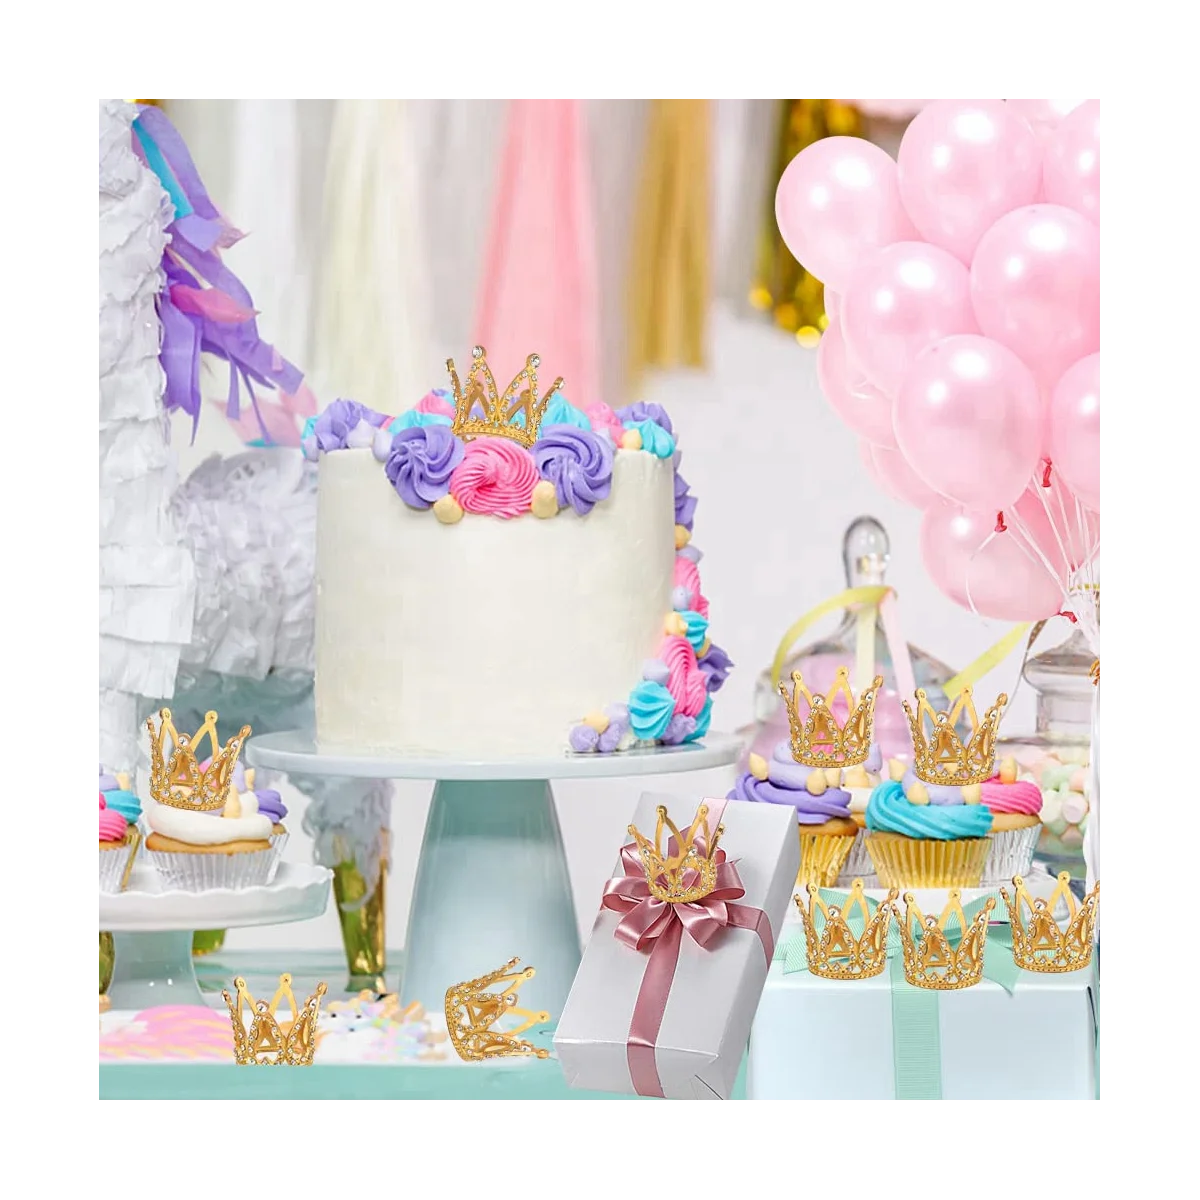 

10 Pcs Gold Cake Topper Tiny Baby Small Rhinestone Tiara Crown for Flower Arrangements Shower Birthday Wedding Decor